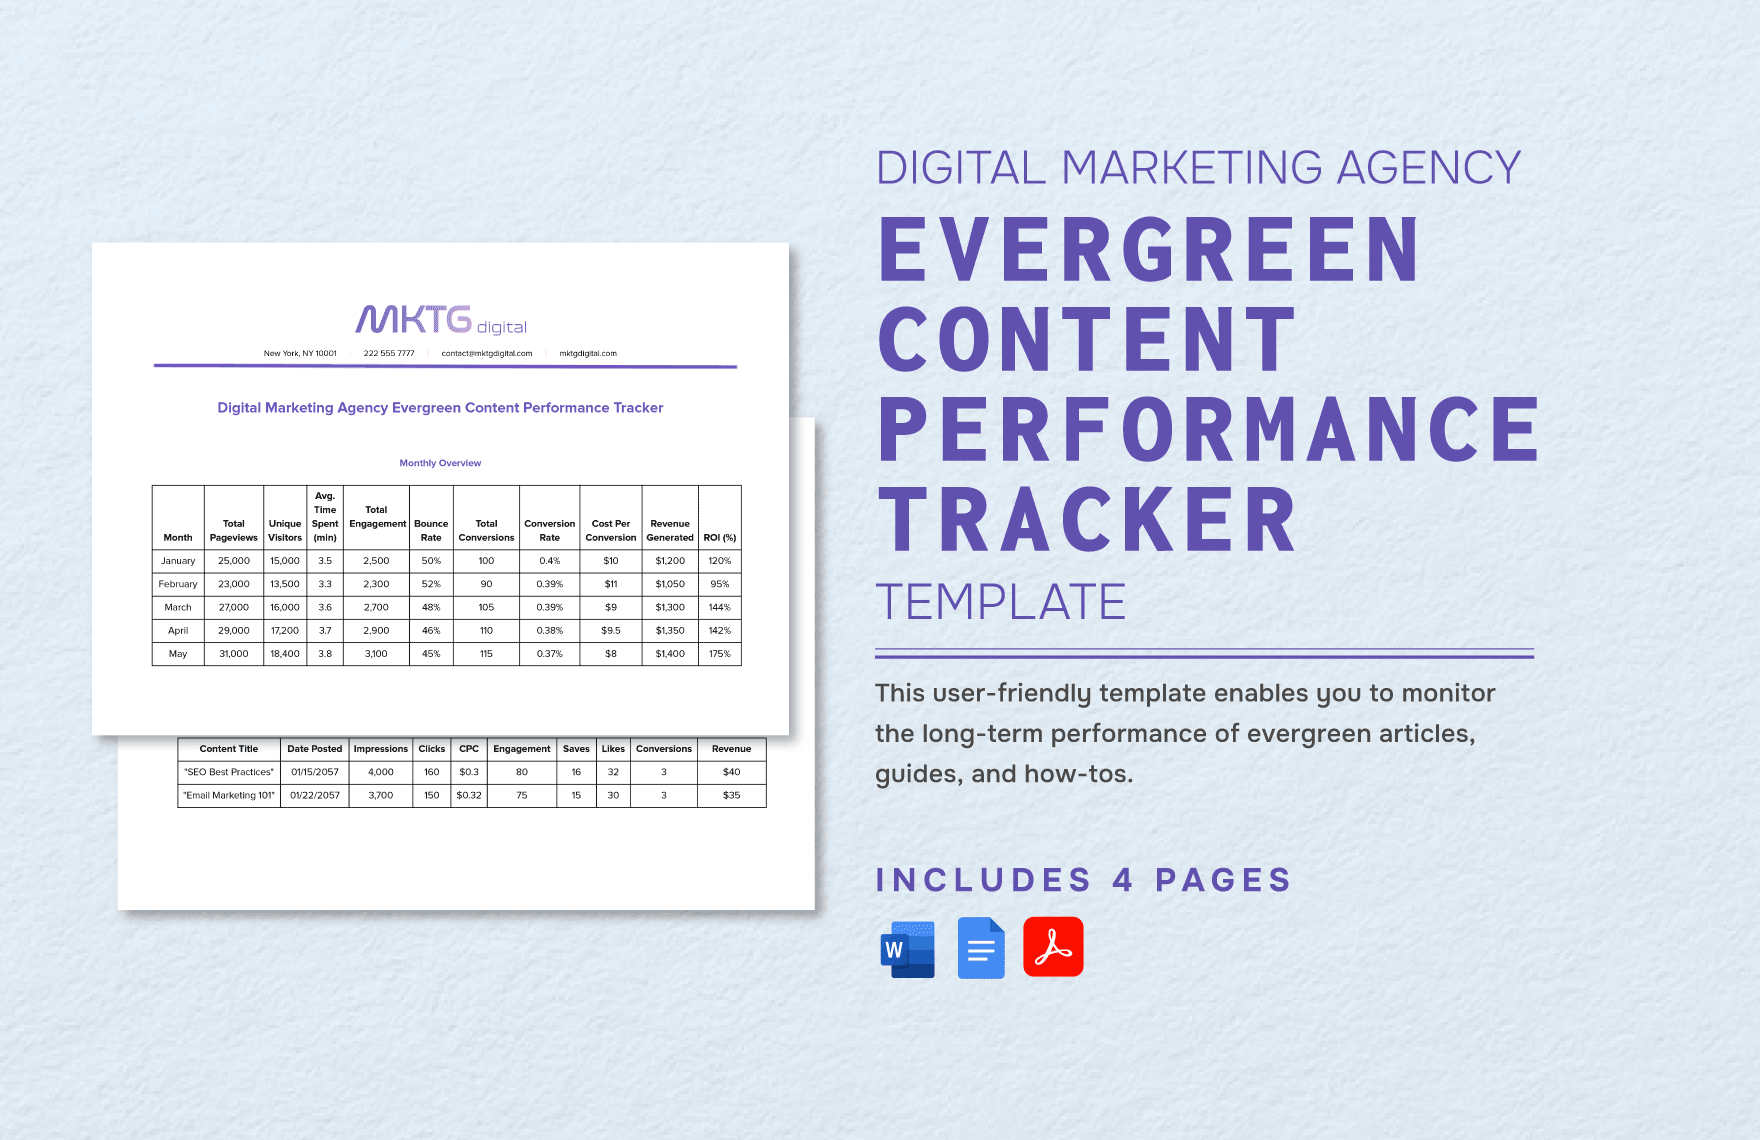 Digital Marketing Agency Evergreen Content Performance Tracker Template